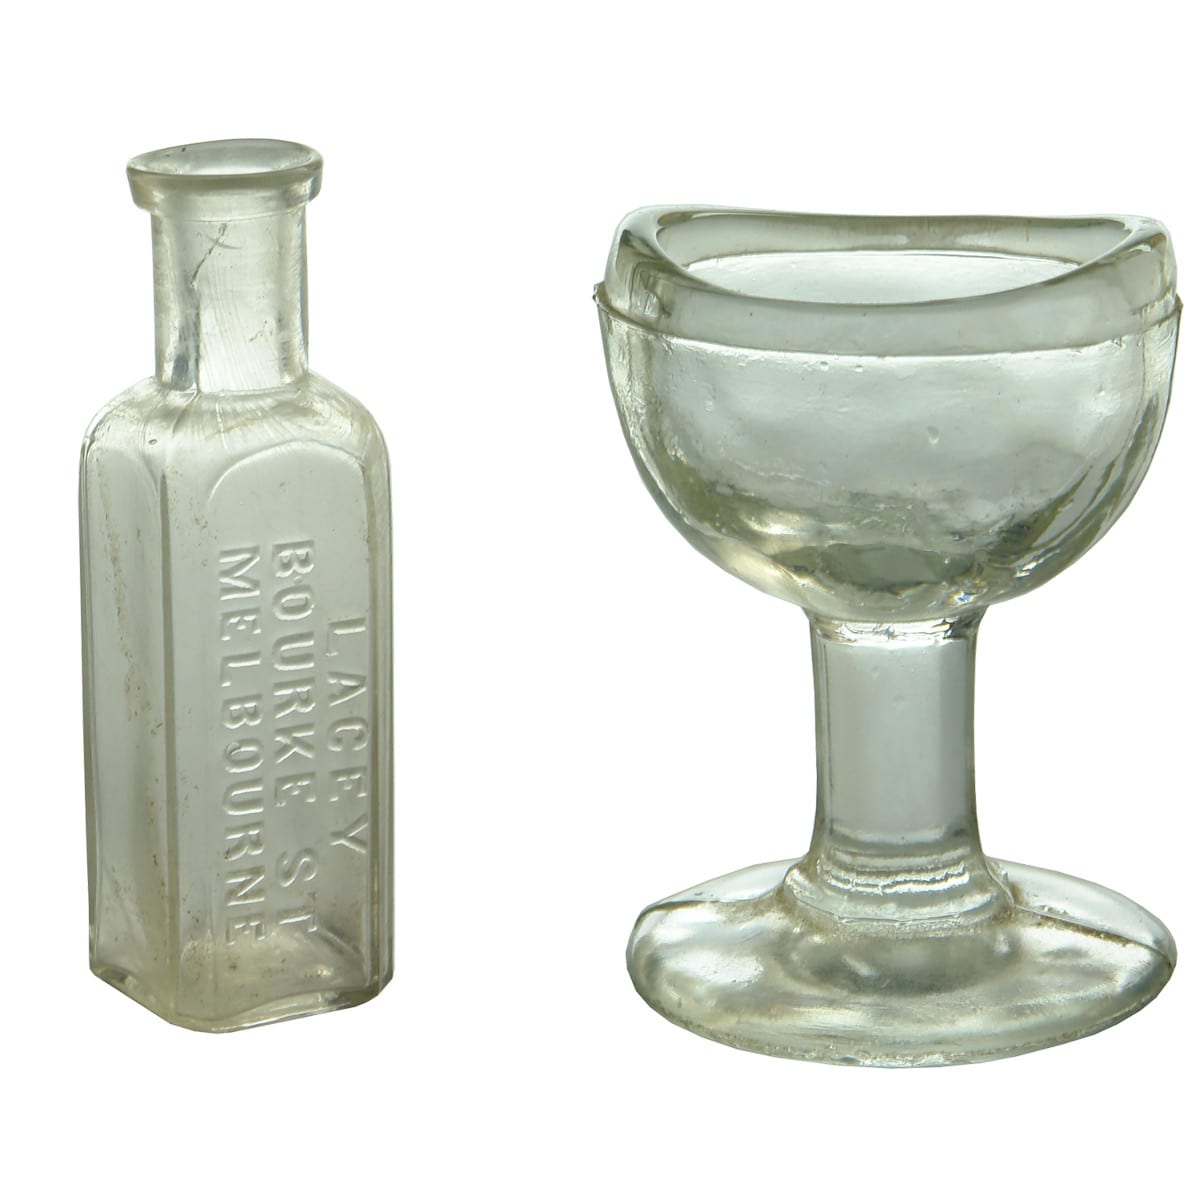 2 Items Chemist Bottle & Eye Bath. Lacey, Bourke St., Melbourne; Clear glass pedestal eye bath. No markings.